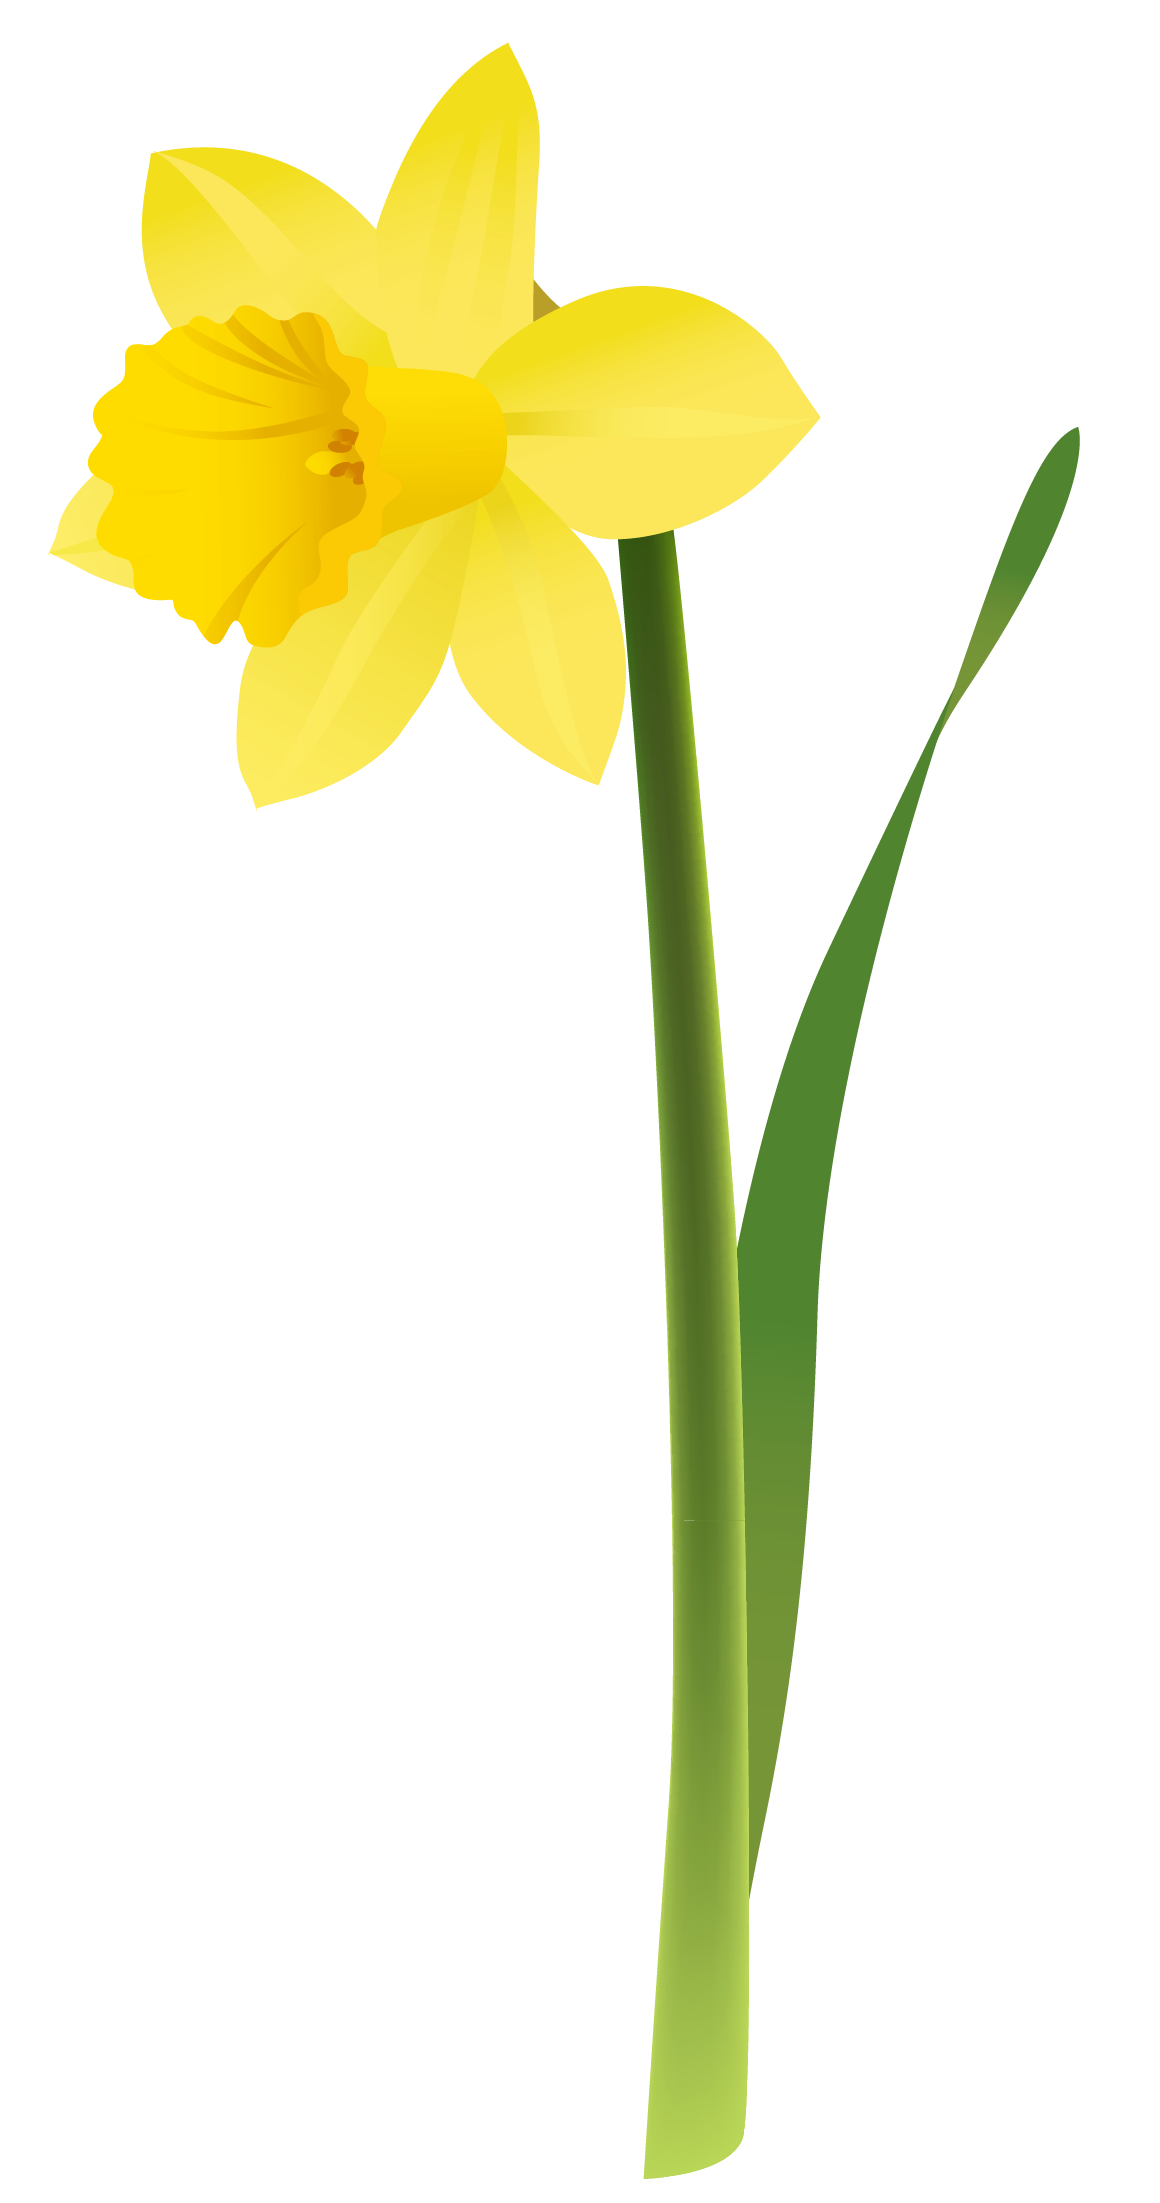 Clip art · Yellow Daffodils Clipart